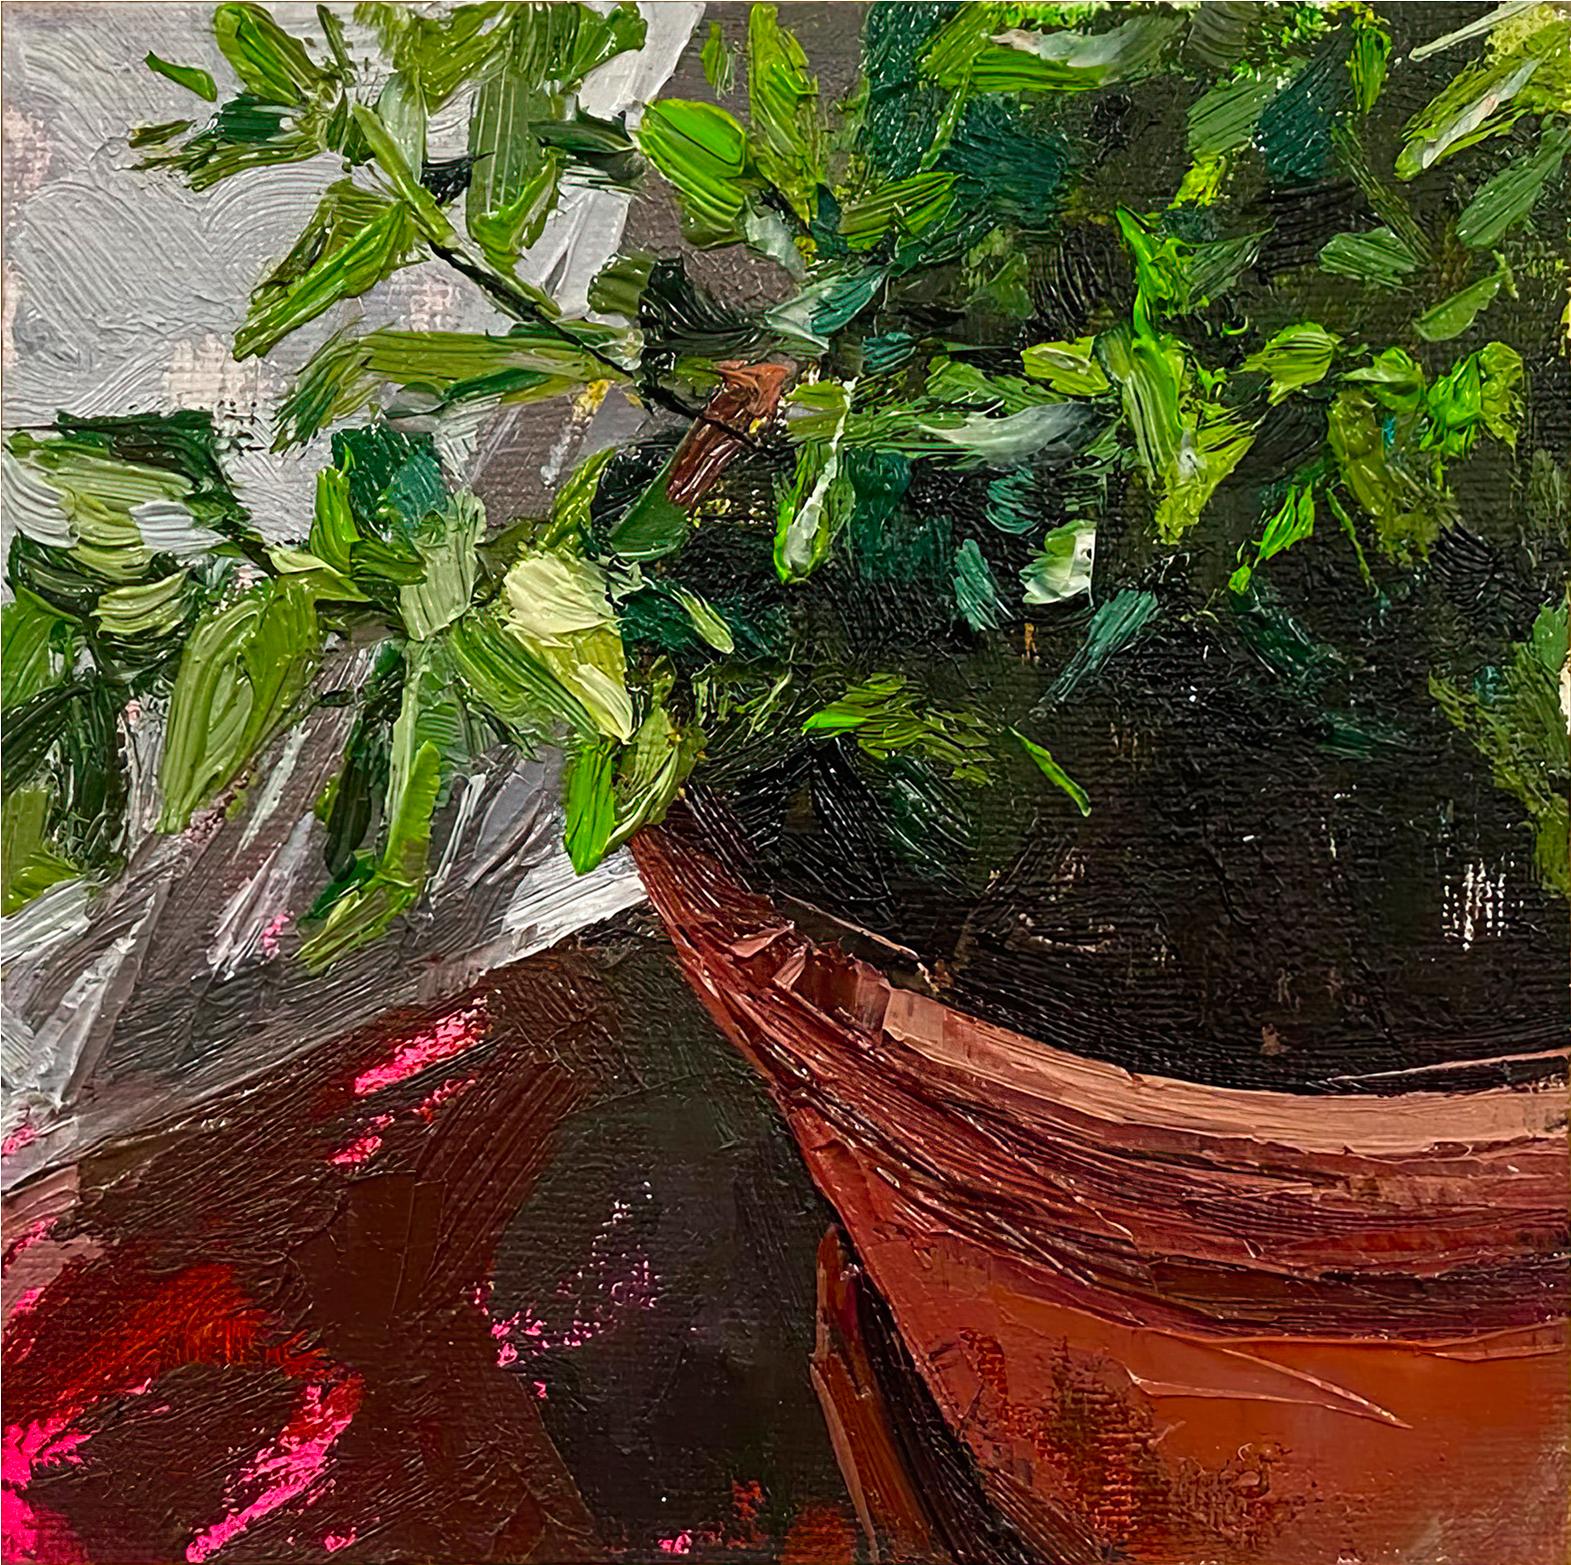 Conrado López Figurative Painting - "Pot Plants 2" Original Oil and Acrylic Painting